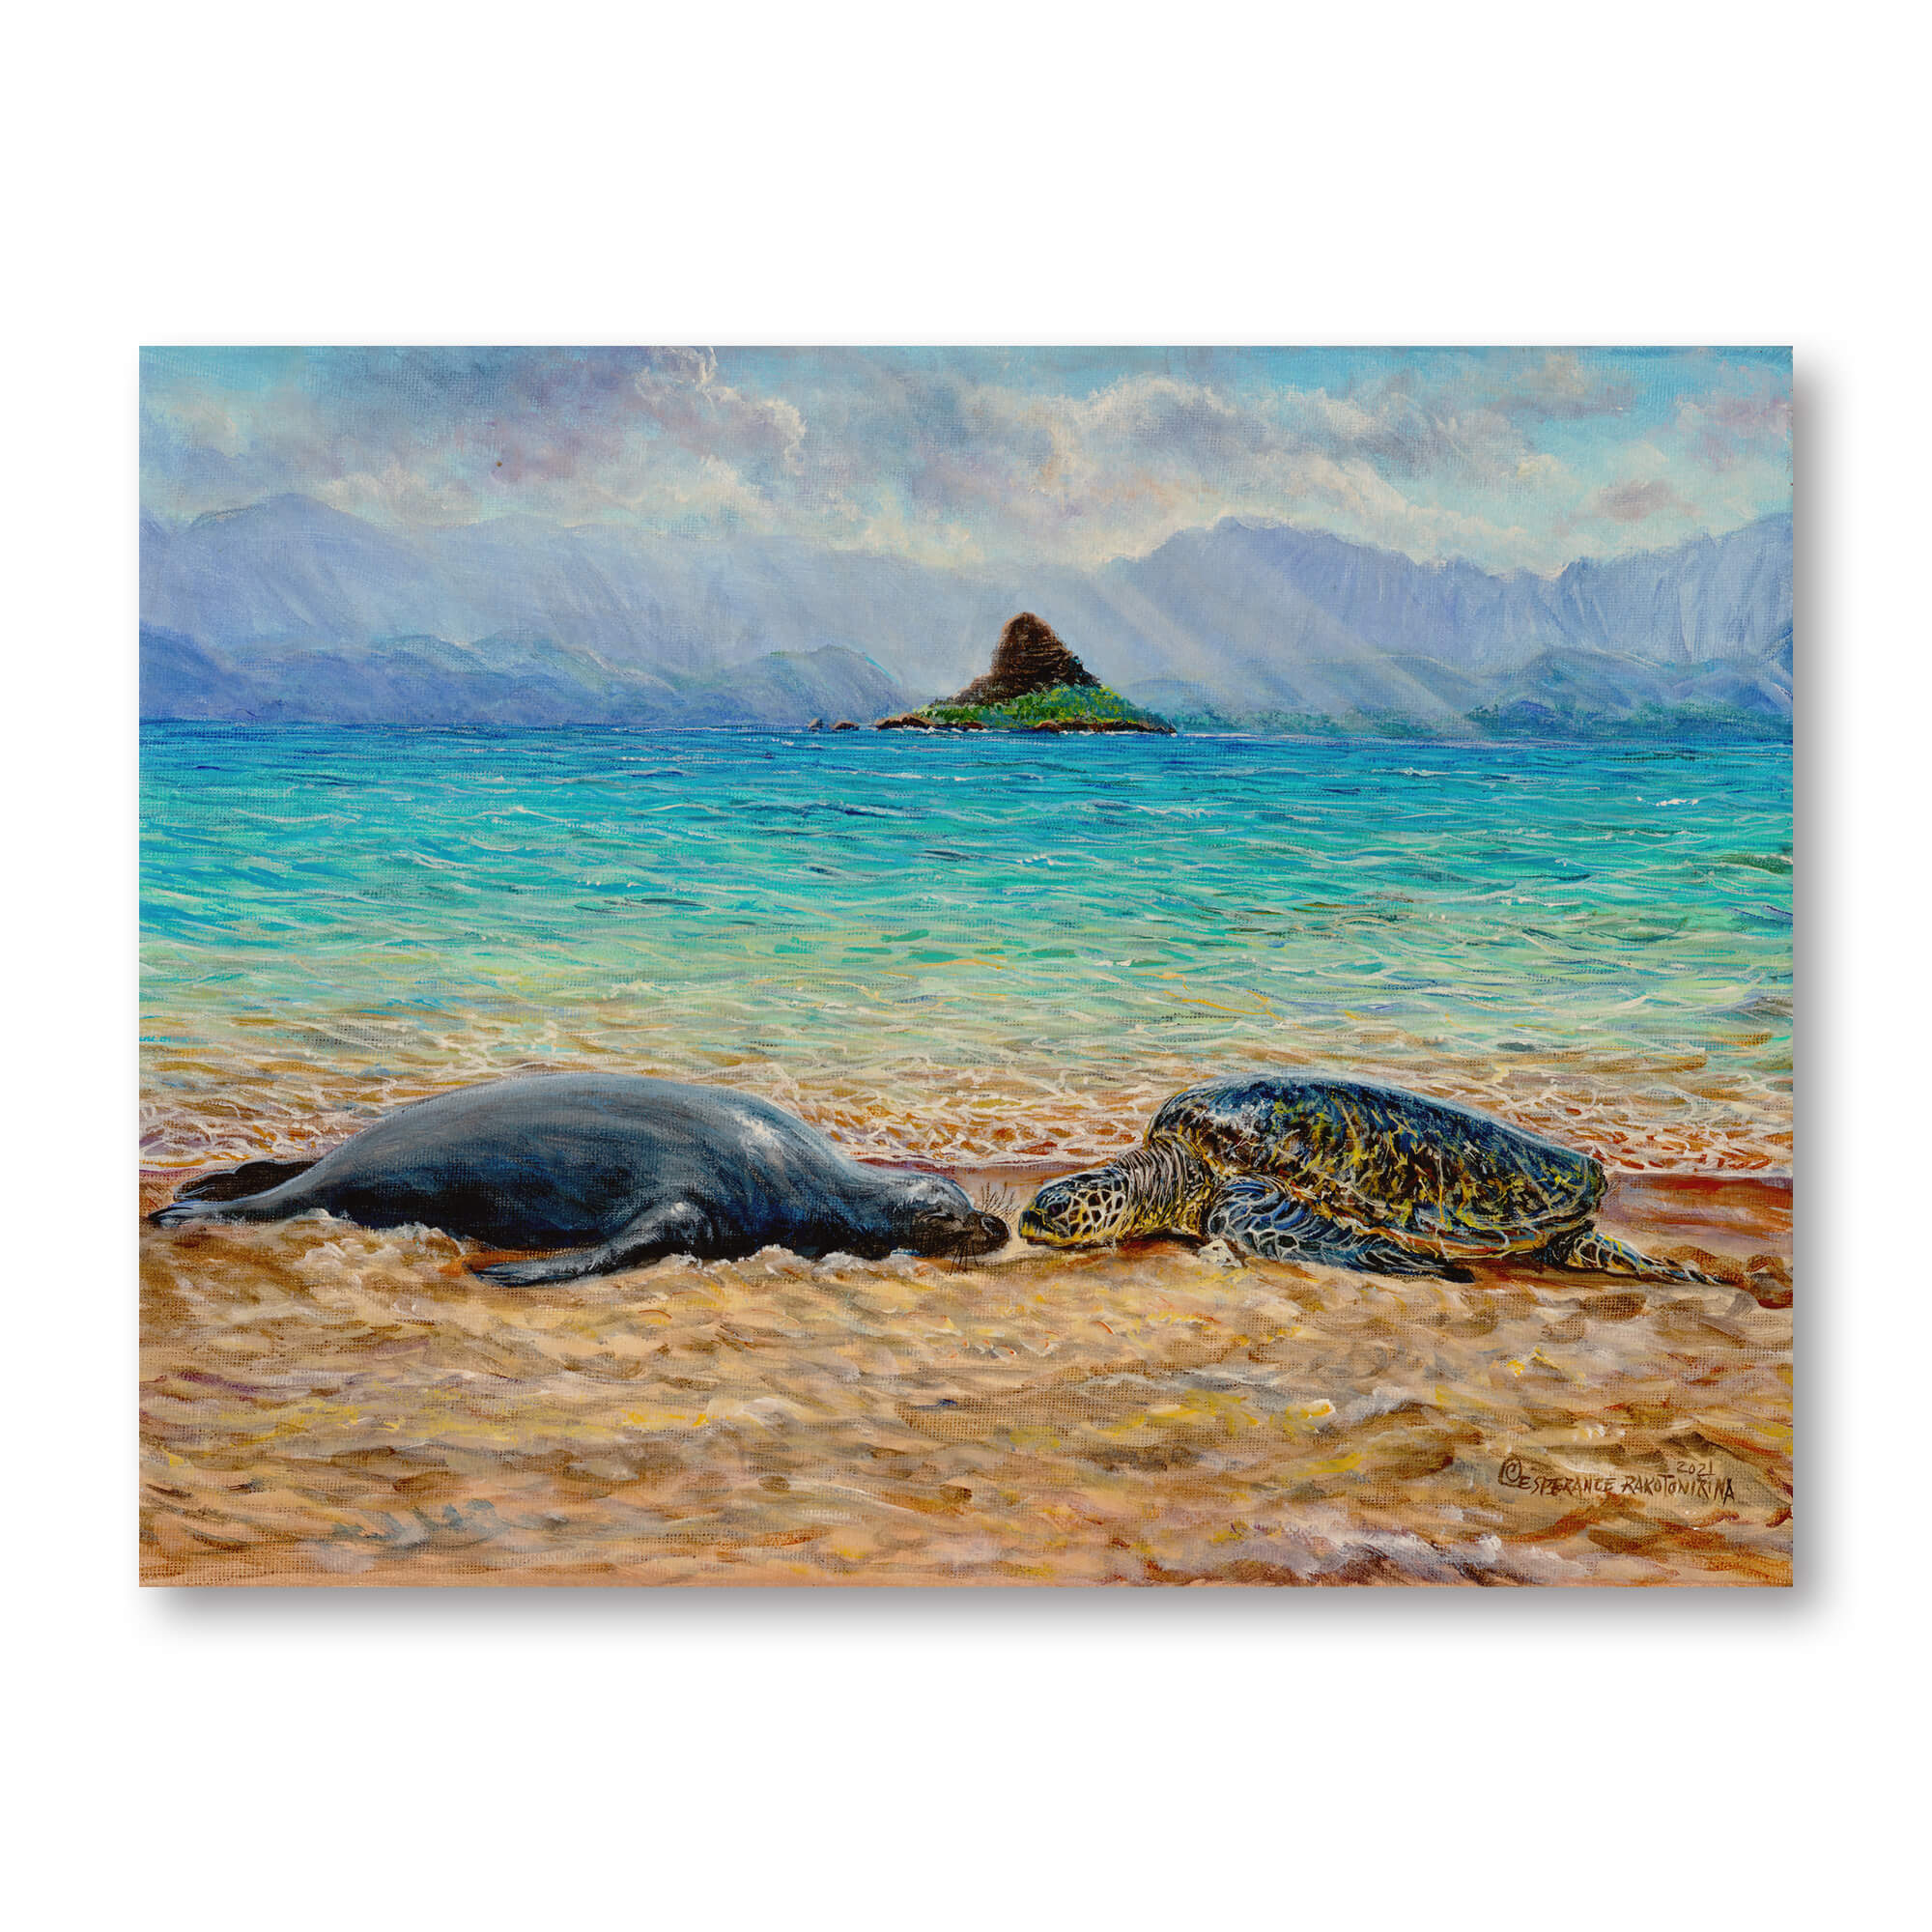 Wood print featuring a seal resting on the beach by hawaii artist Esperance Rakotonirina